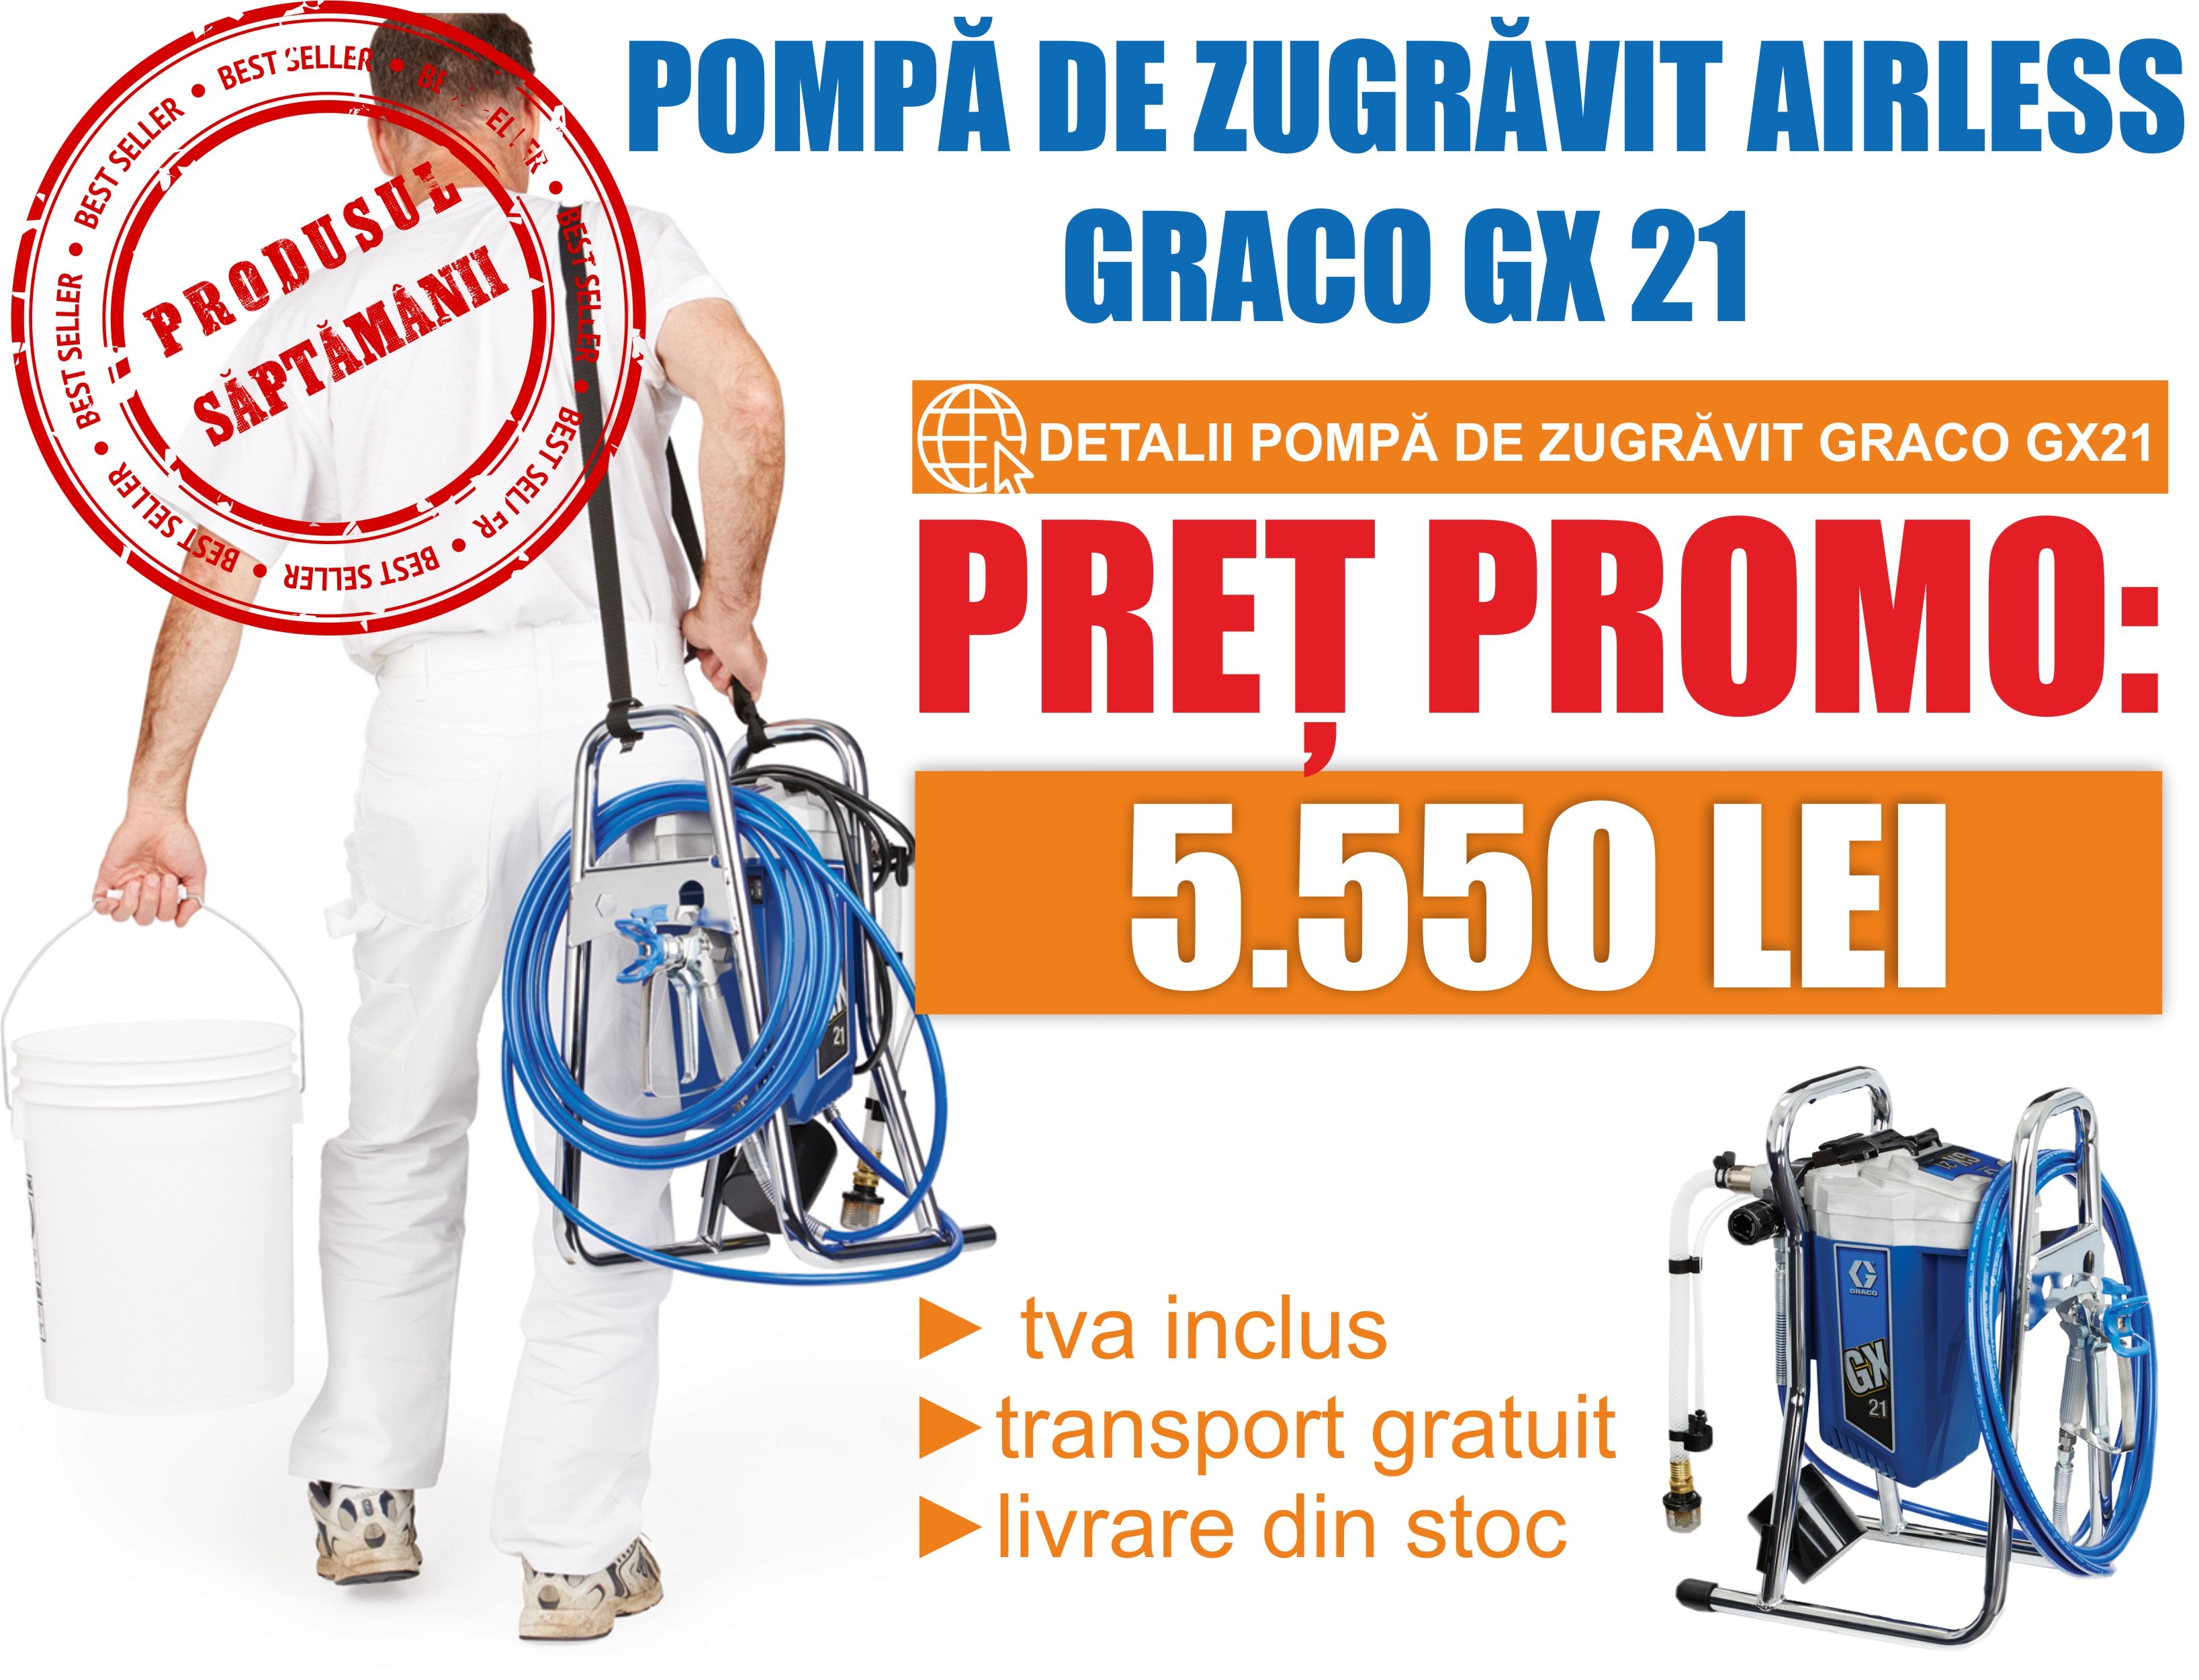 POMPA DE ZUGRAVIT AIRLESS GRACO GX21